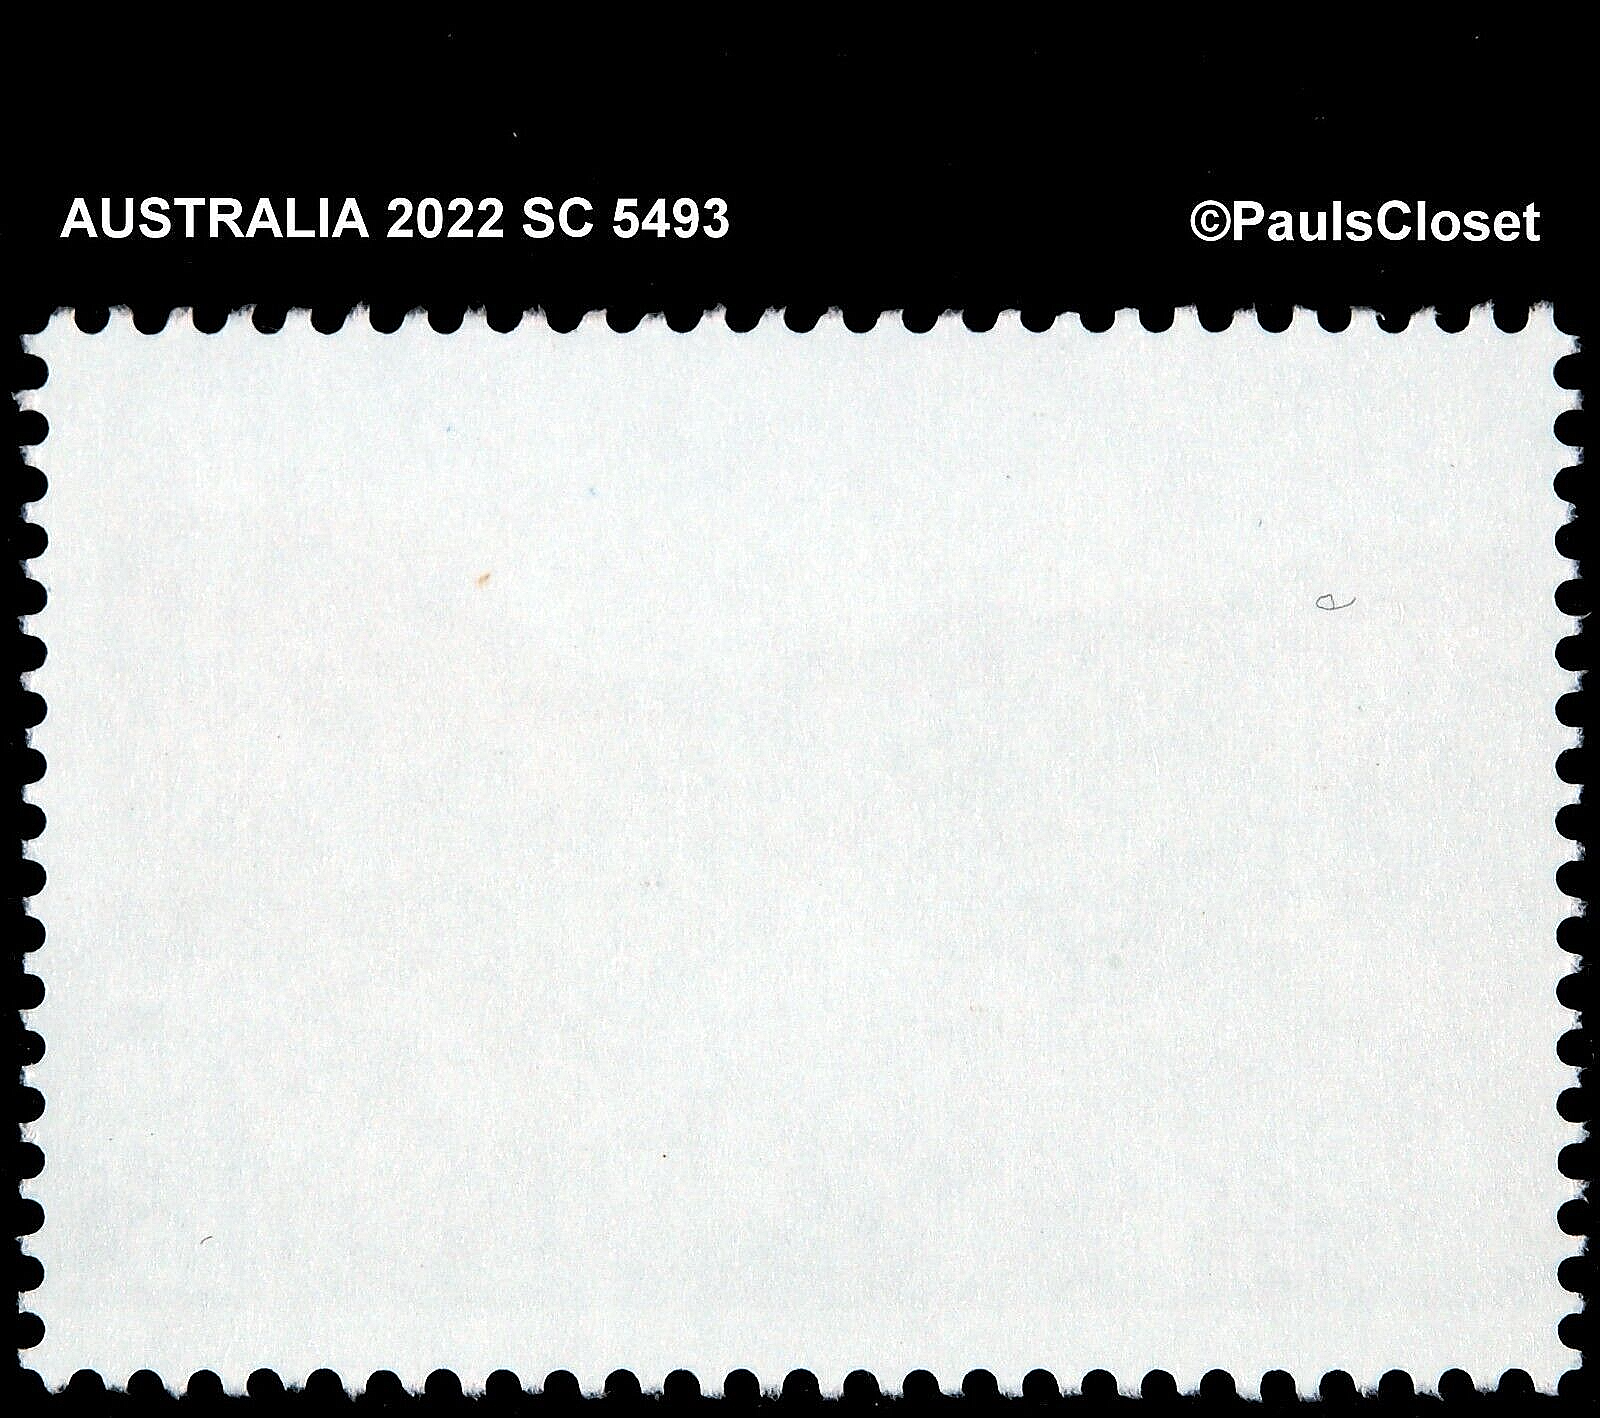 AUSTRALIA 2022 SC 5492-95 AERIAL VIEWS $2.90, $3.50, $3.70 & $4.00 MNH OG VFINE Без бренда - фотография #5